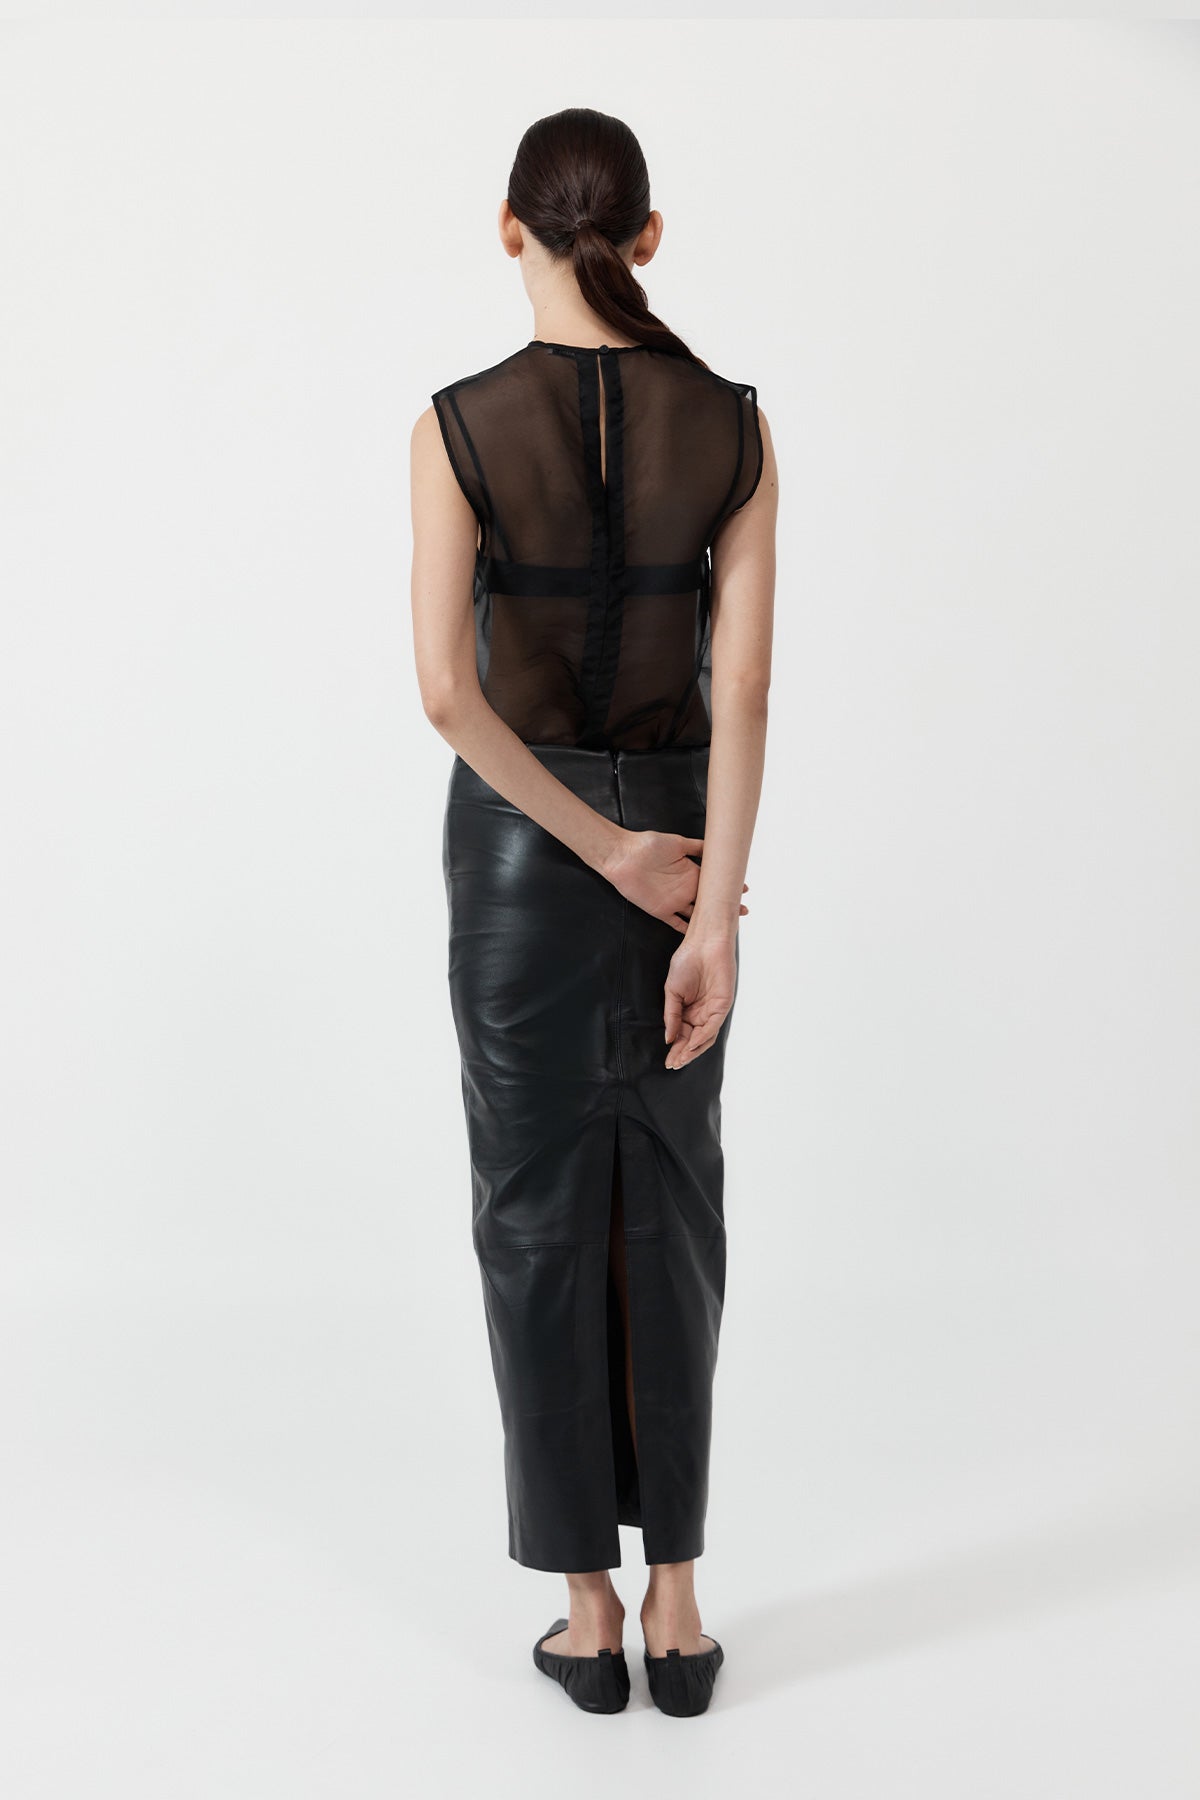 St. Agni | Leather Column Skirt - Black